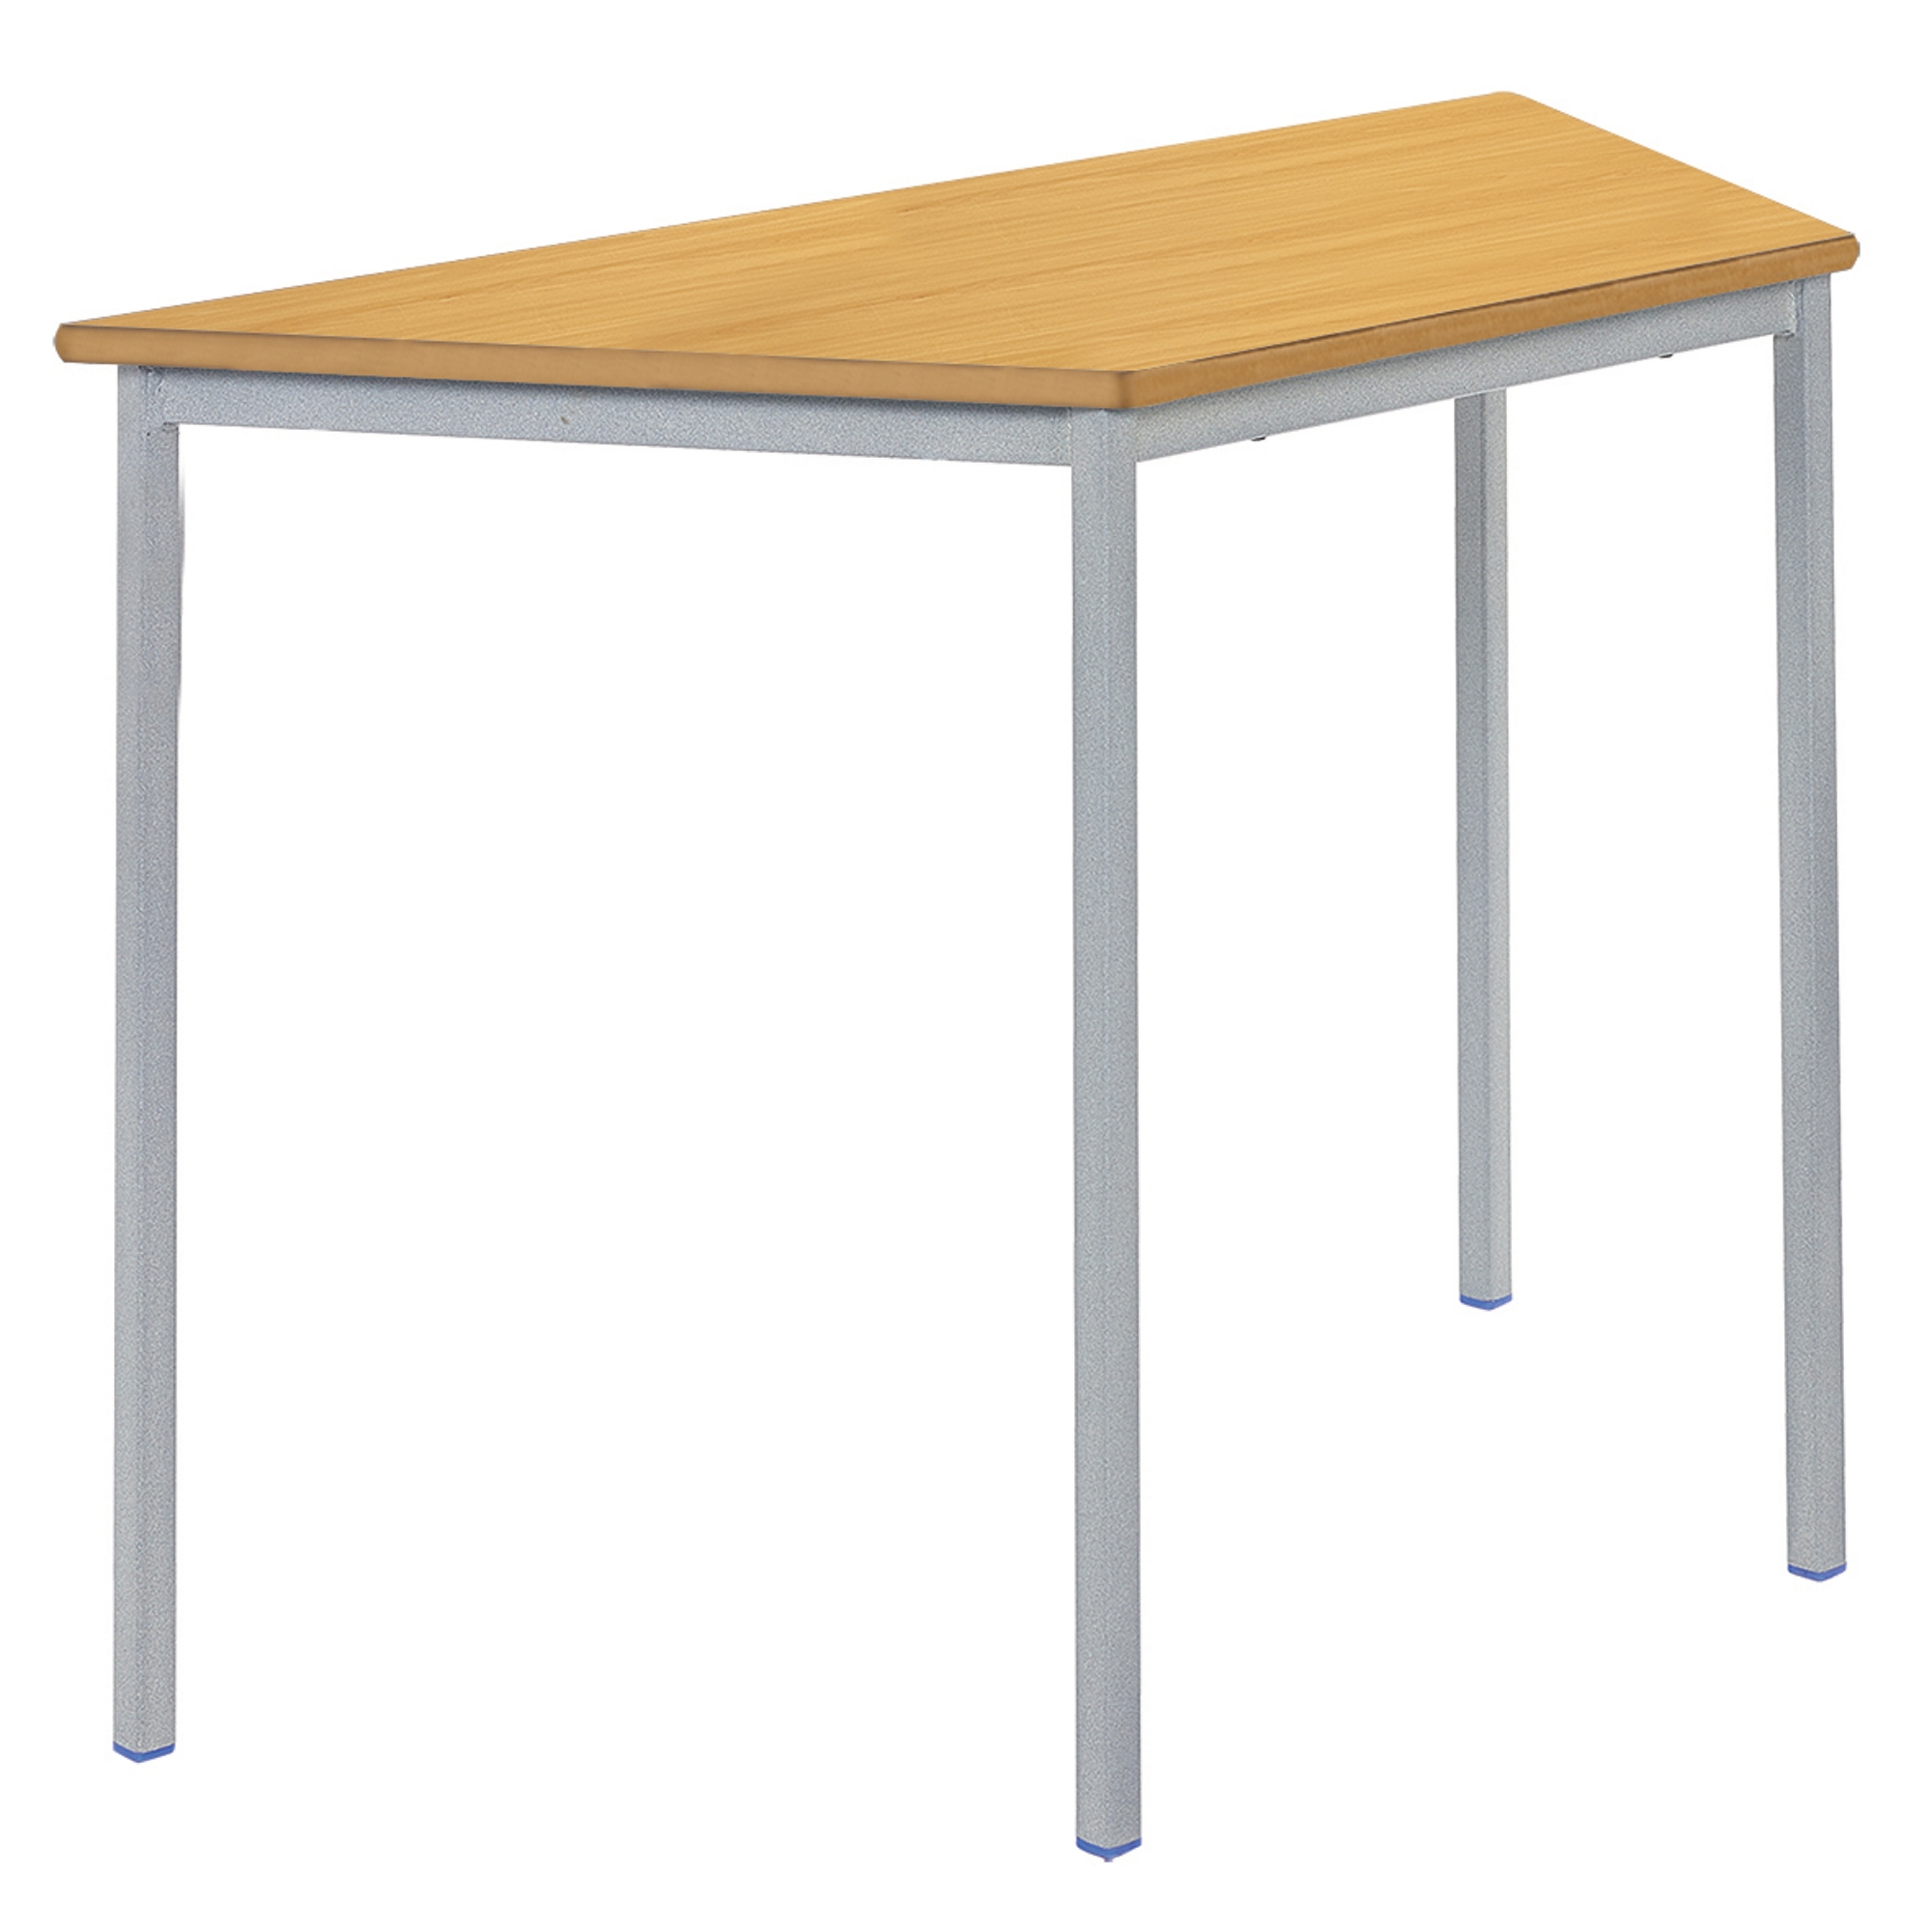 Classmates Trapezoidal Fully Welded Classroom Table - 1100 x 550 x 530mm - Beech